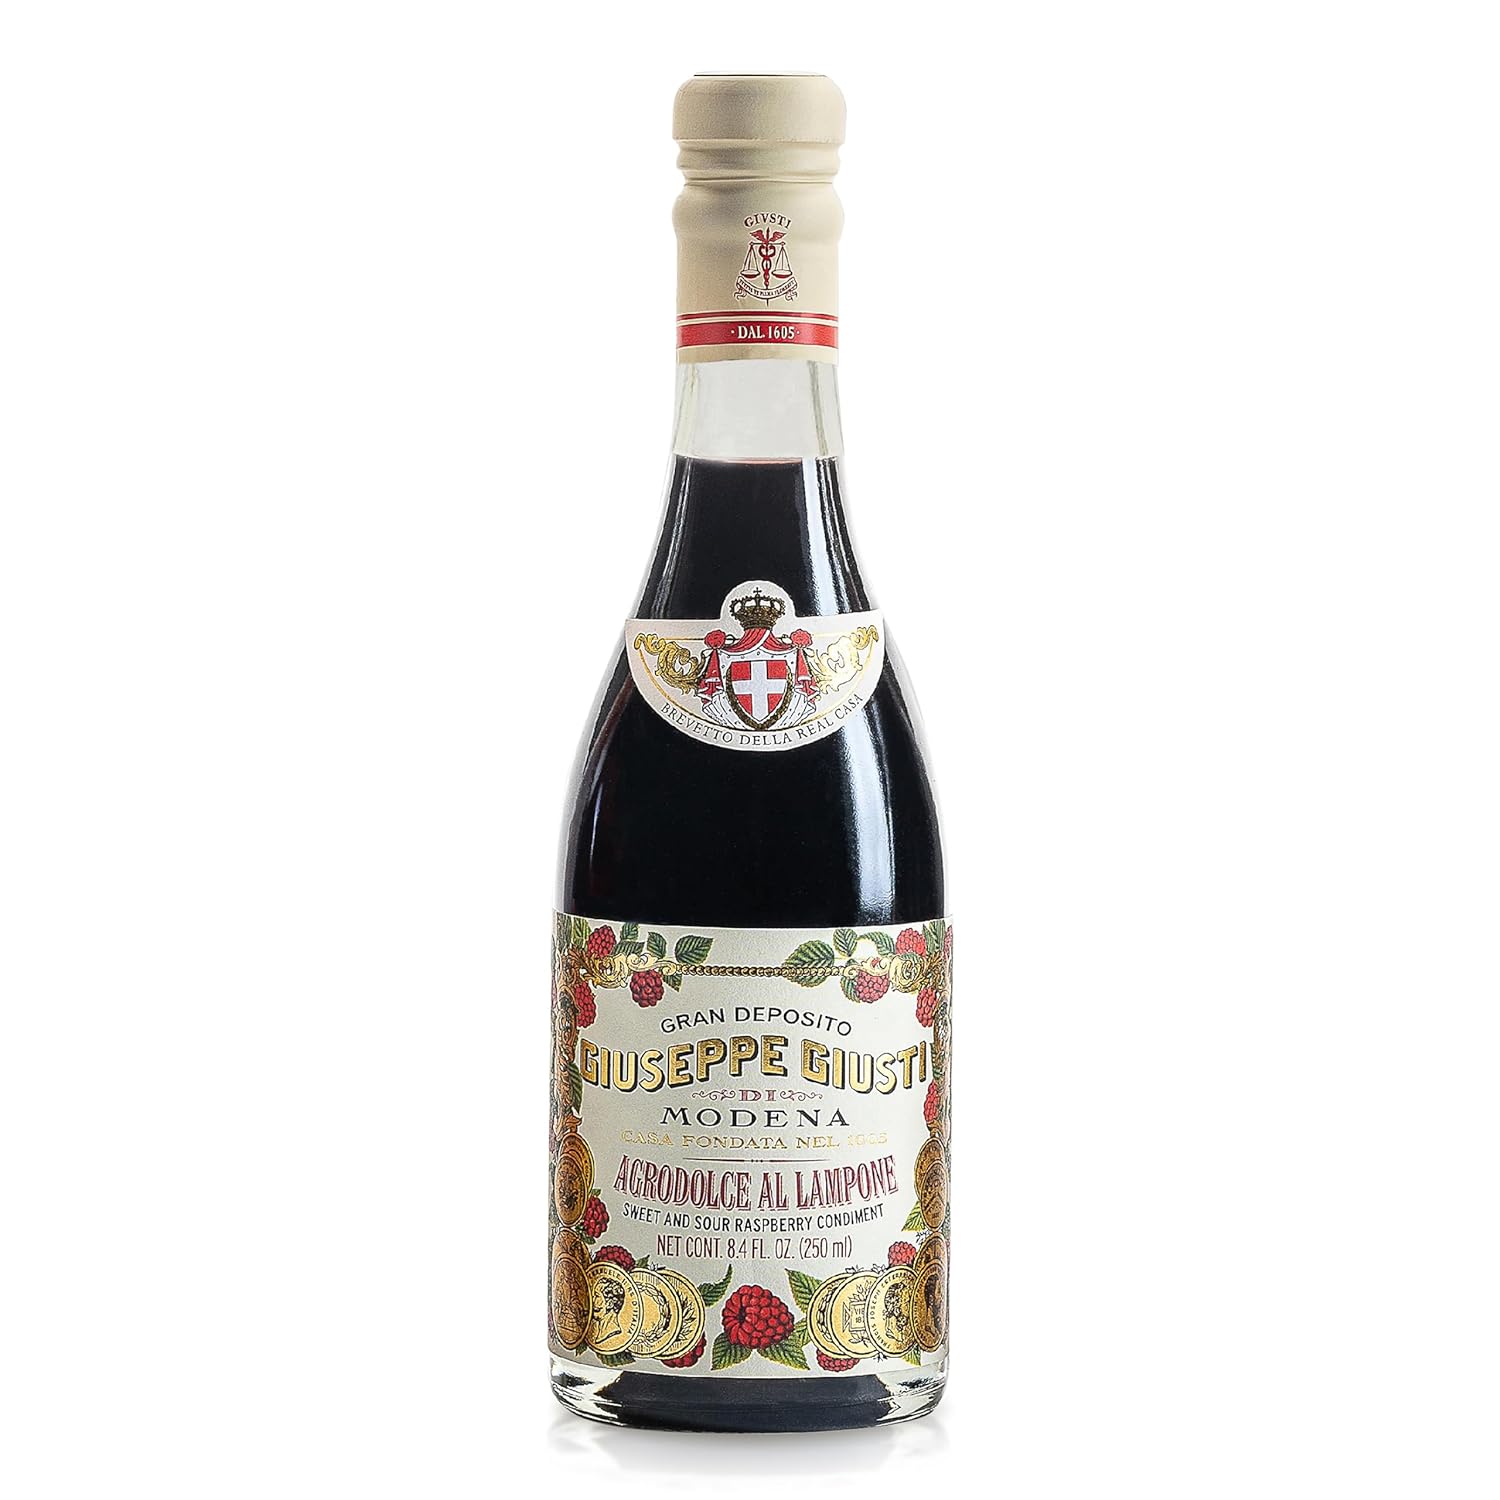 Giusti Raspberry Vinegar Sweet and Sour Gourmet Fruit Condiment from Modena, Italy - by Giusti